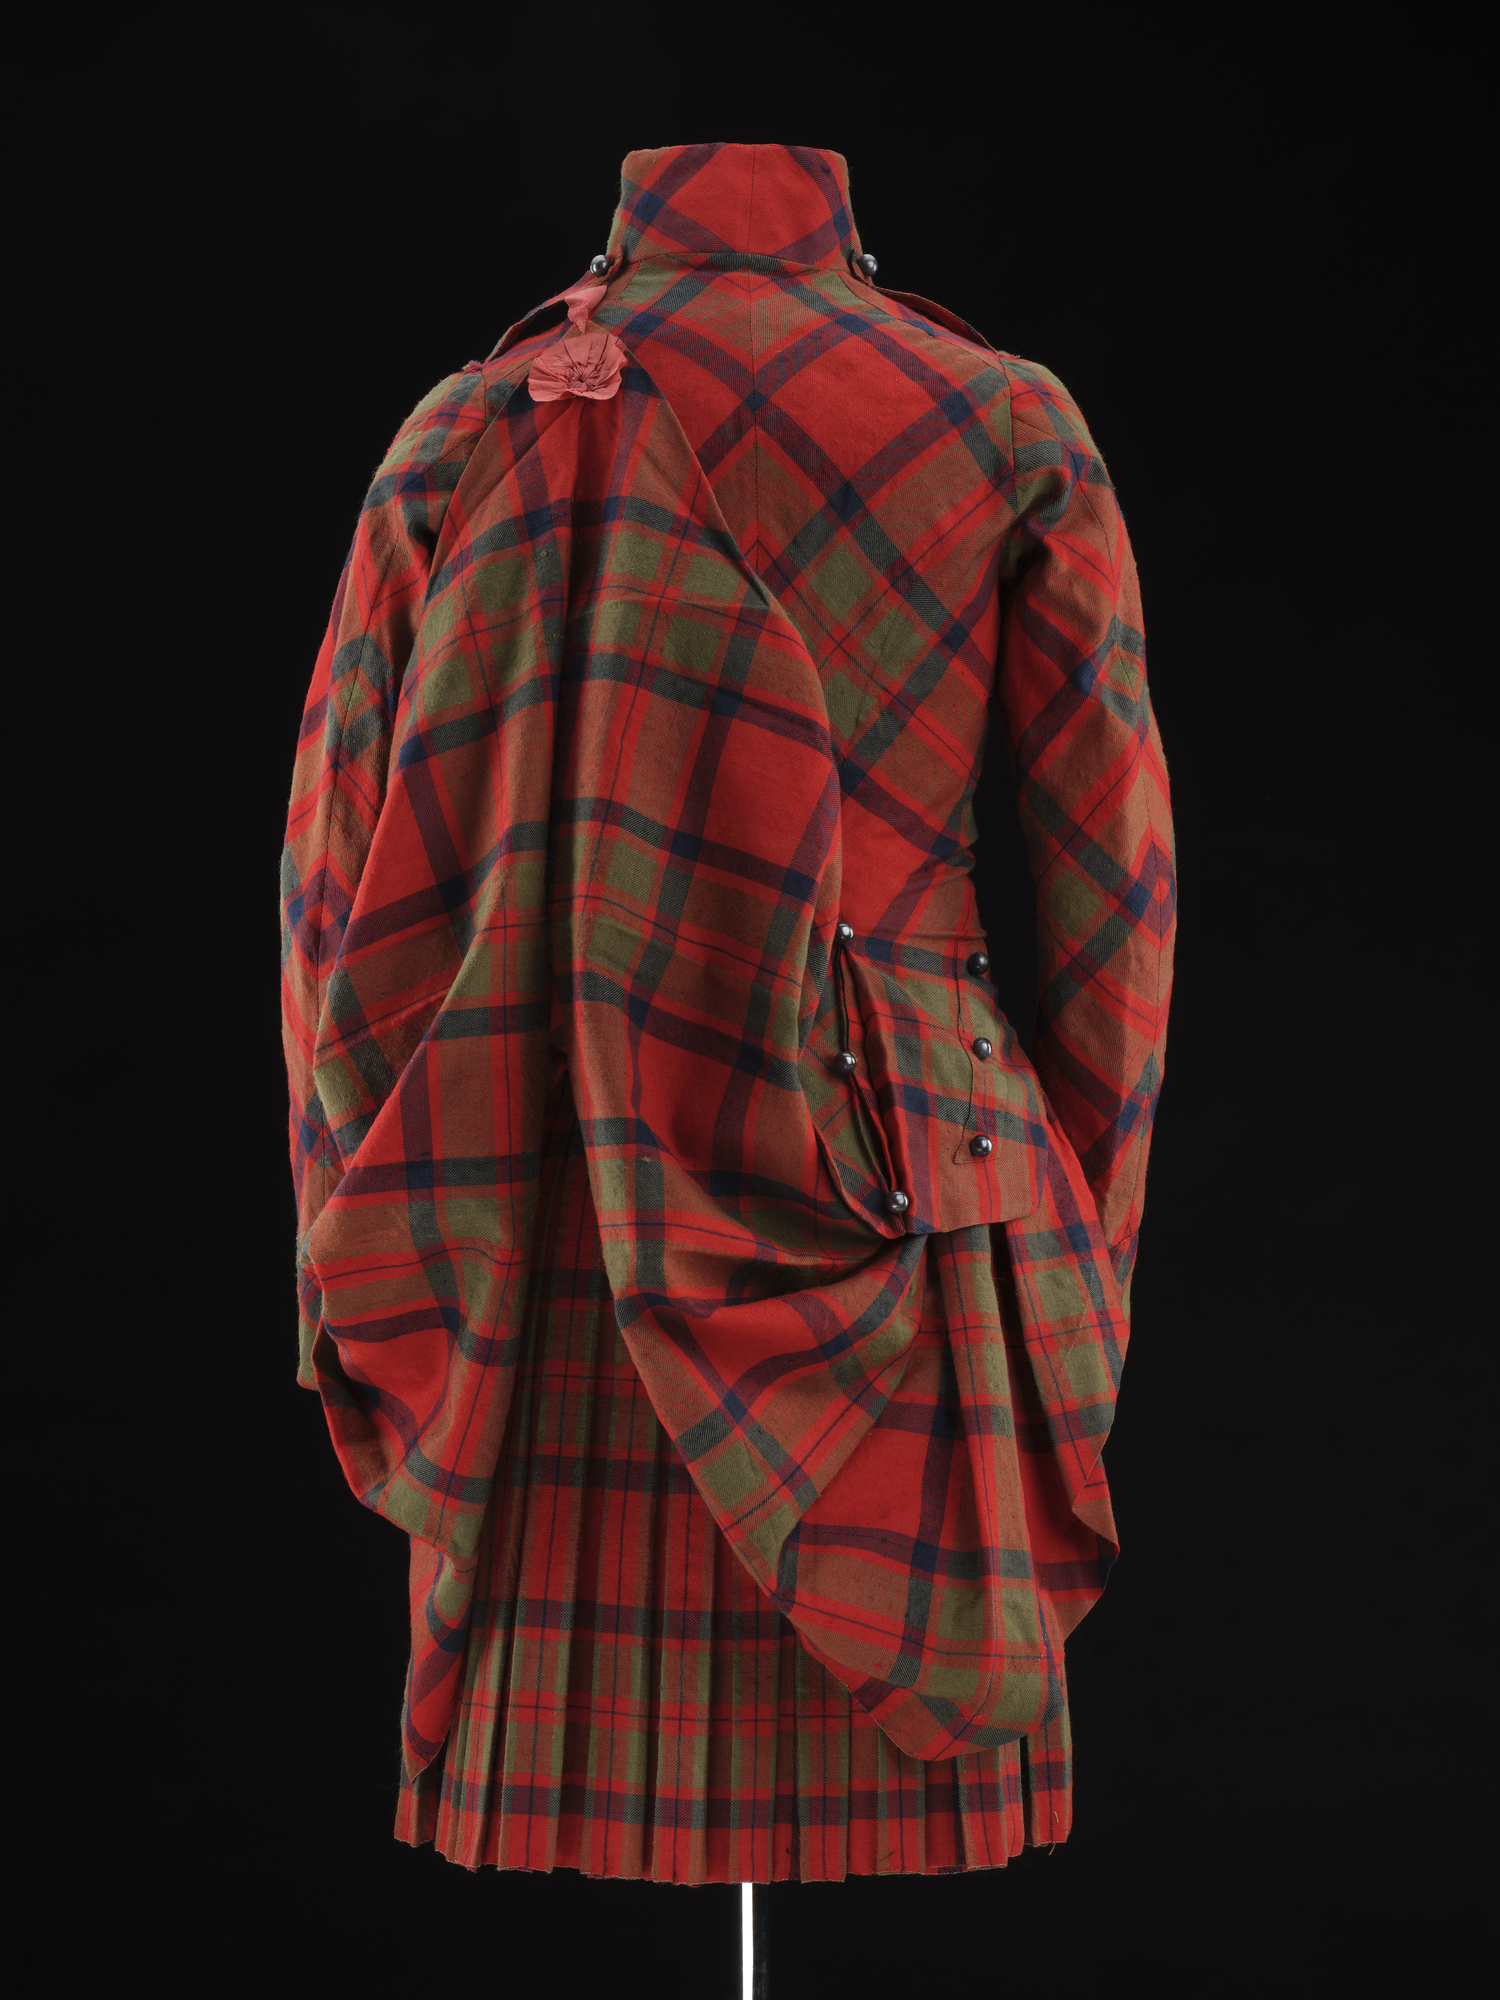 Public domain; Image © National Museums Scotland